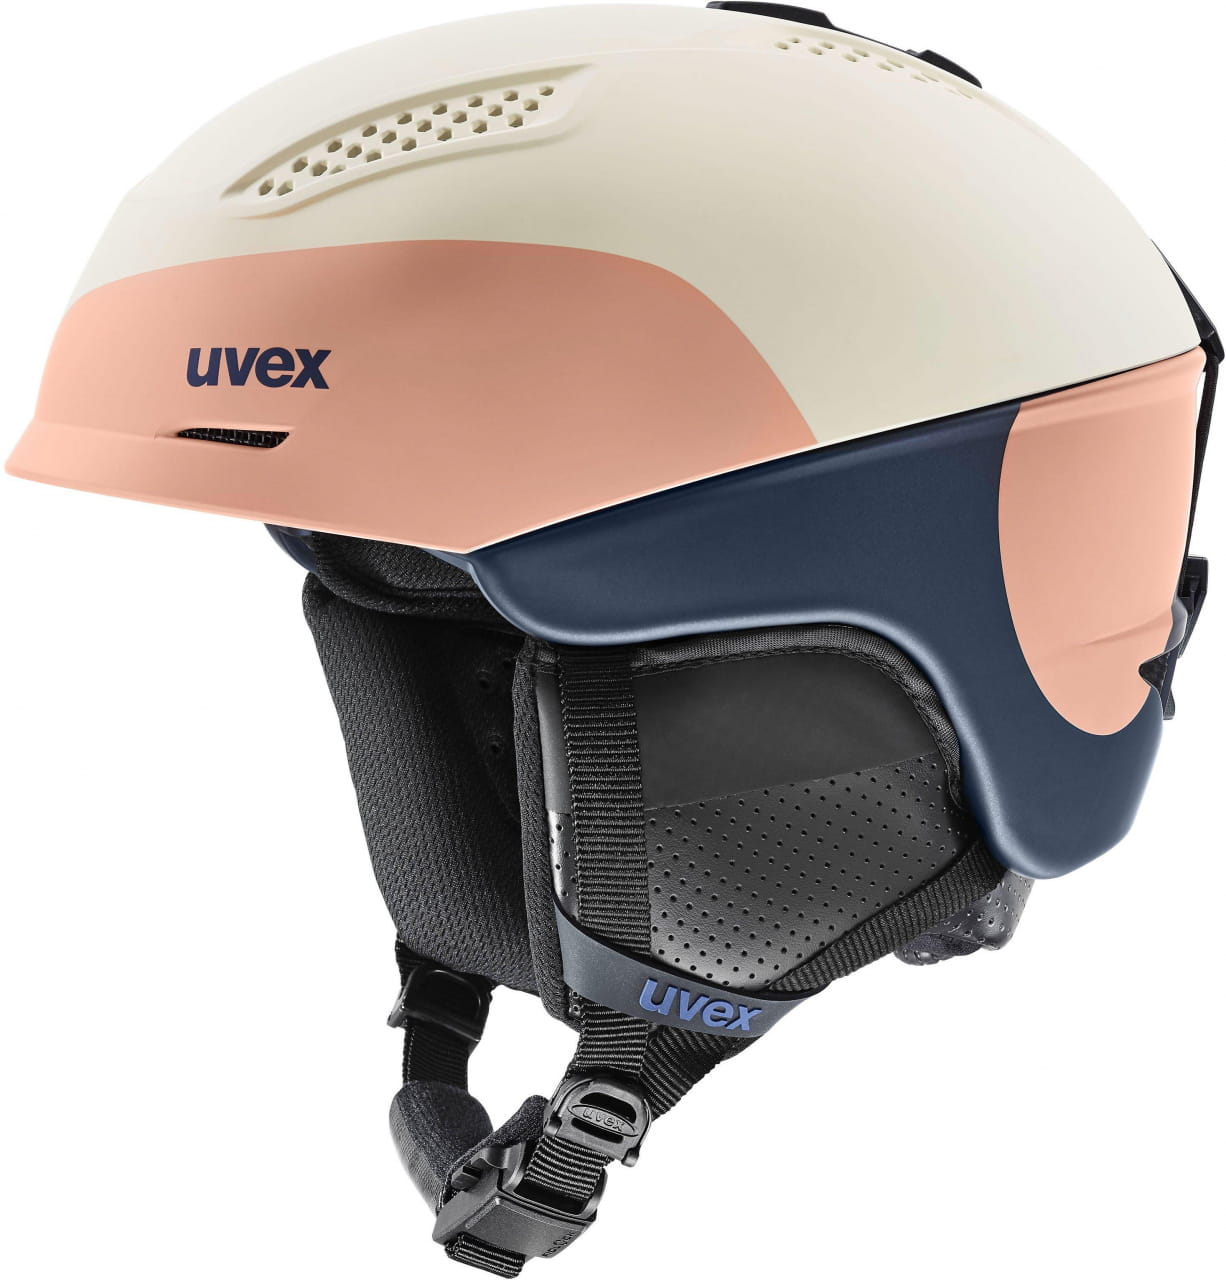 Дамска ски каска Uvex Ultra Pro W